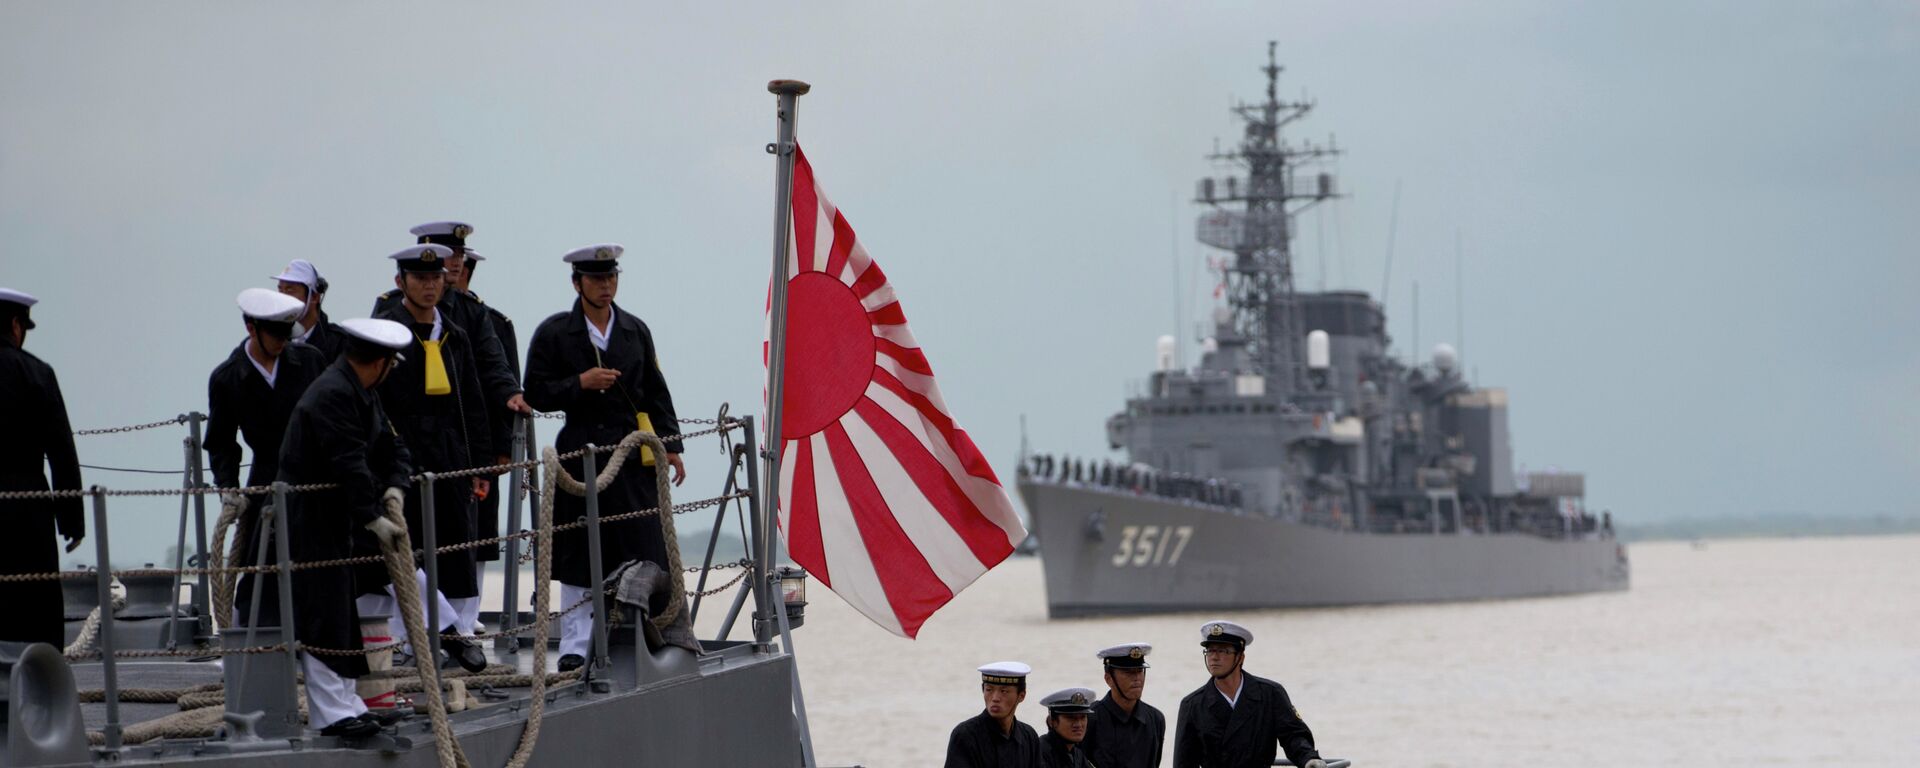 Japanese navy officers stand on the deck of Japan Maritime Self-Defense Force's vessel docked at Thilawa port, Myanmar, Monday, Sept. 30, 2013 - Sputnik International, 1920, 12.09.2021